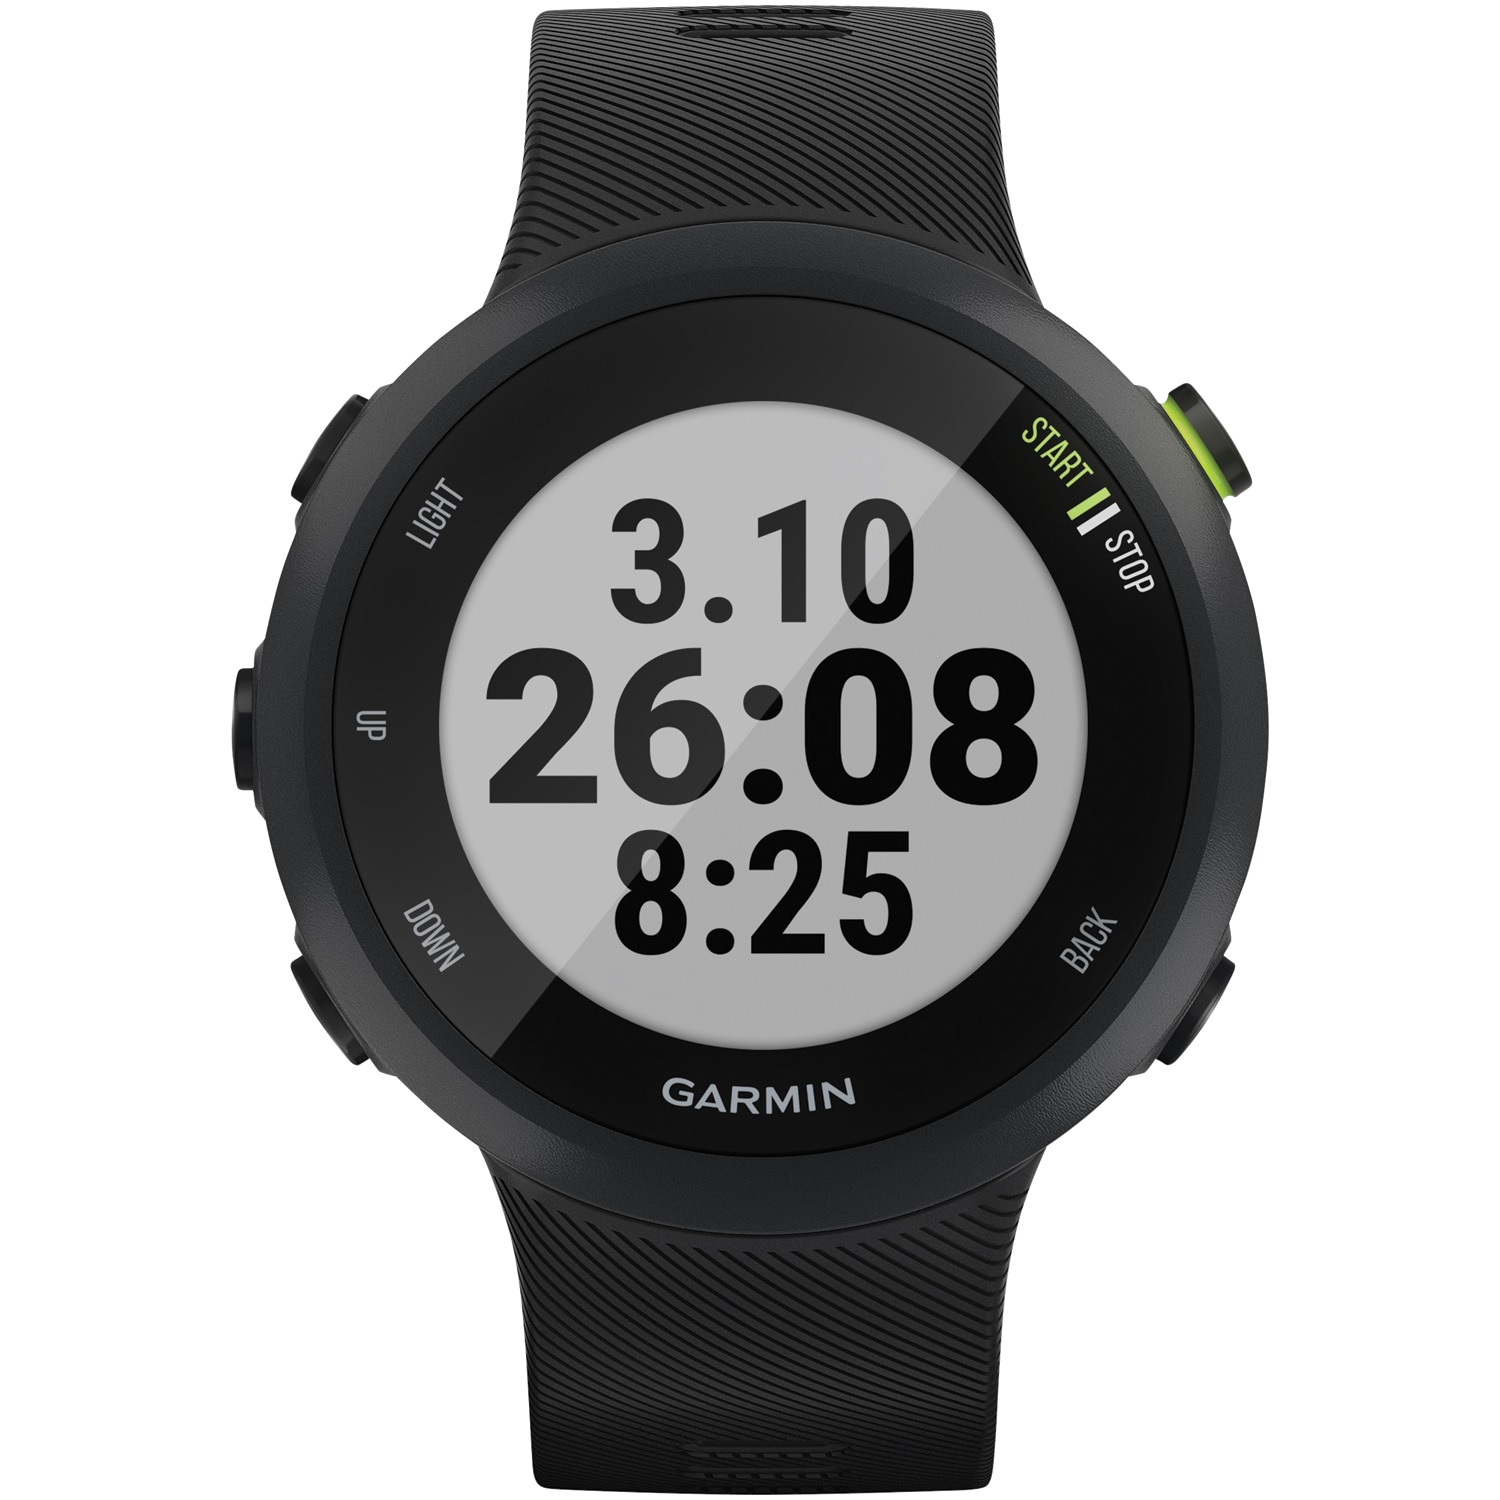 Forerunner® 45 GPS Running Watch in Black - image 5 of 11